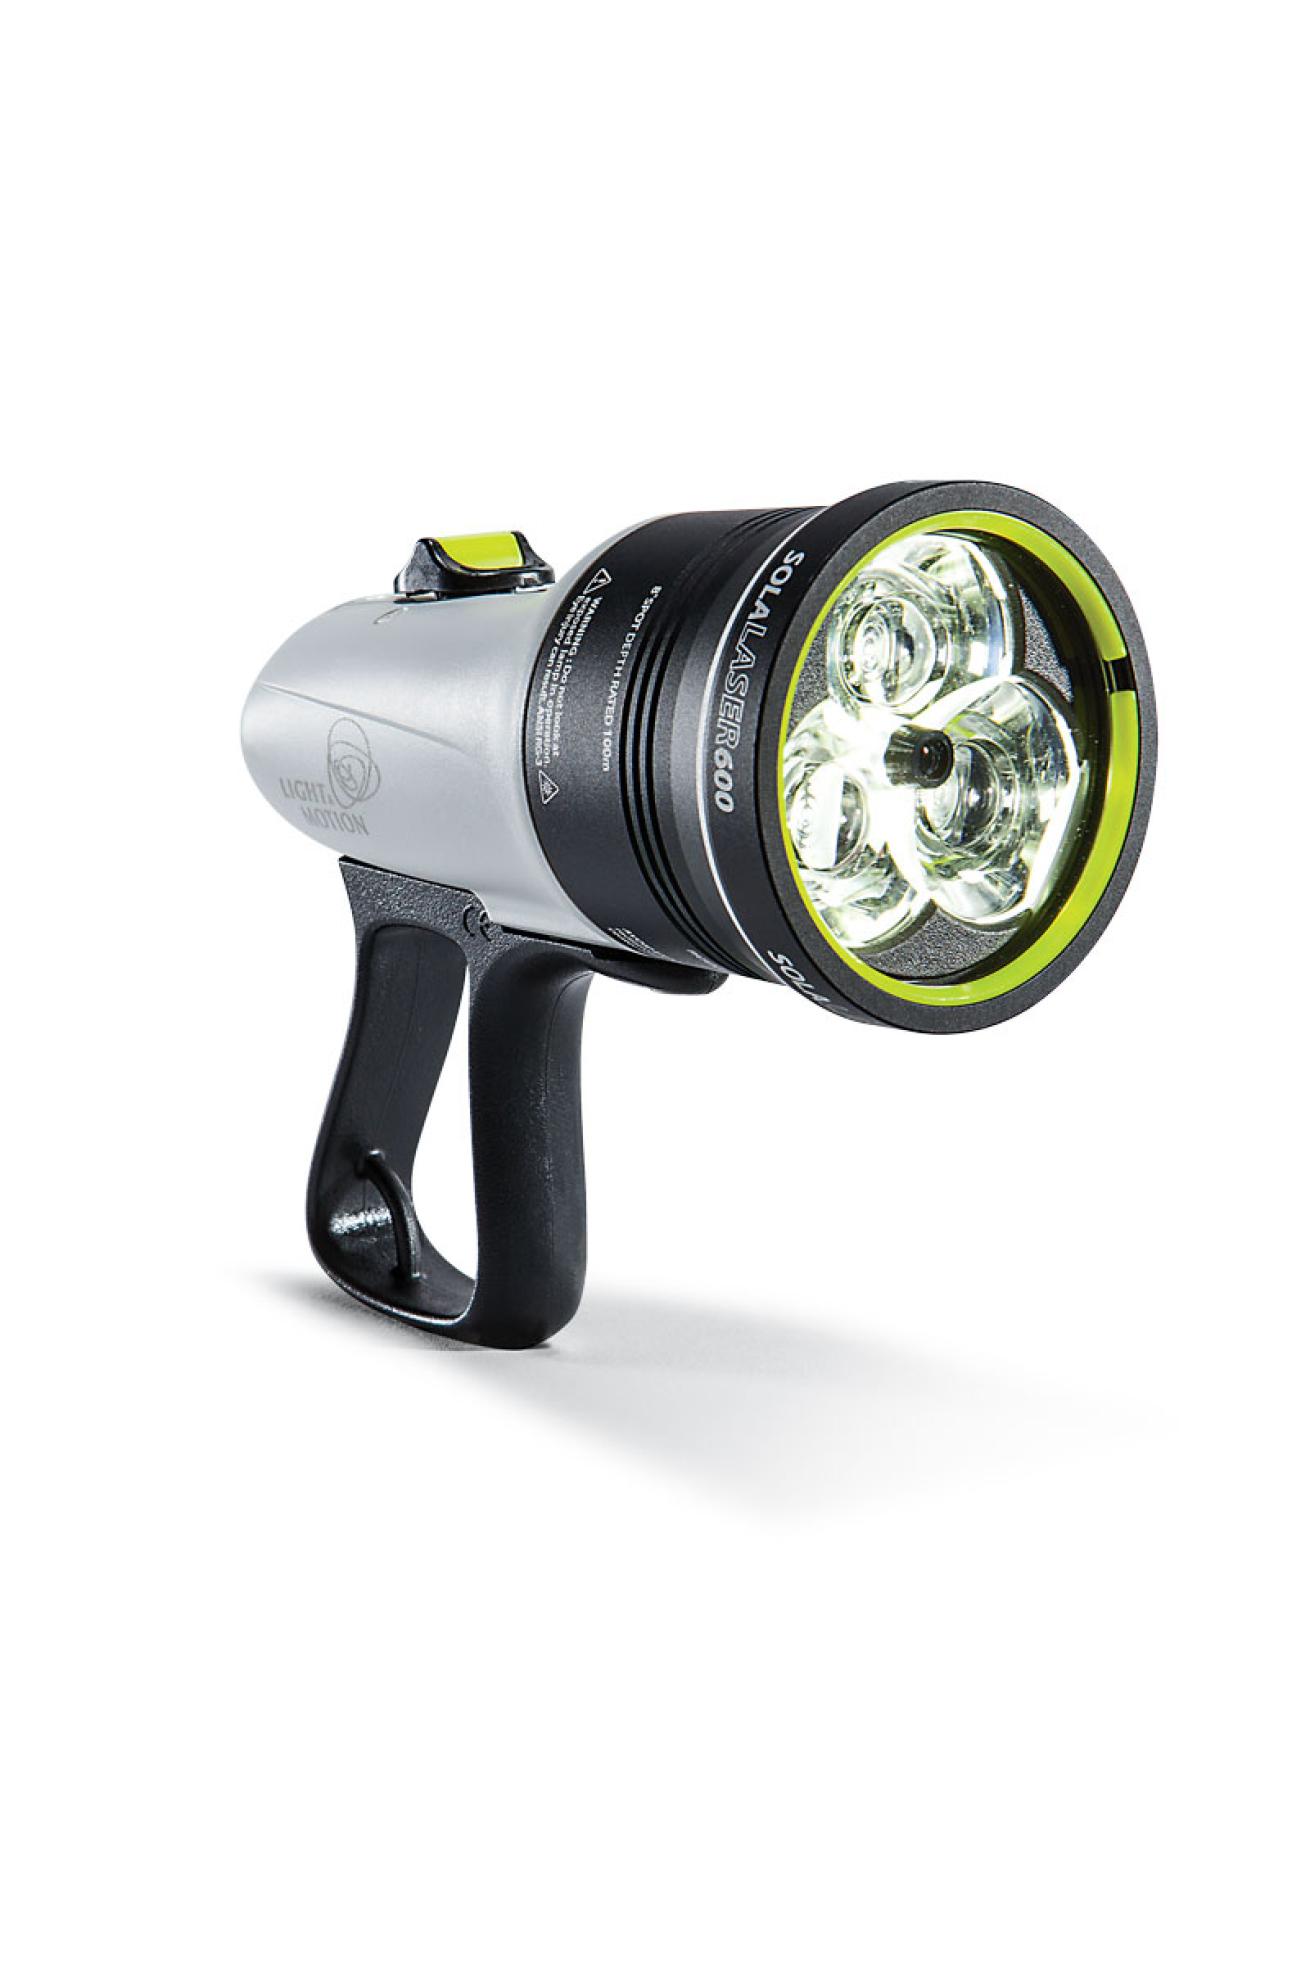 A scuba diving flashlight 